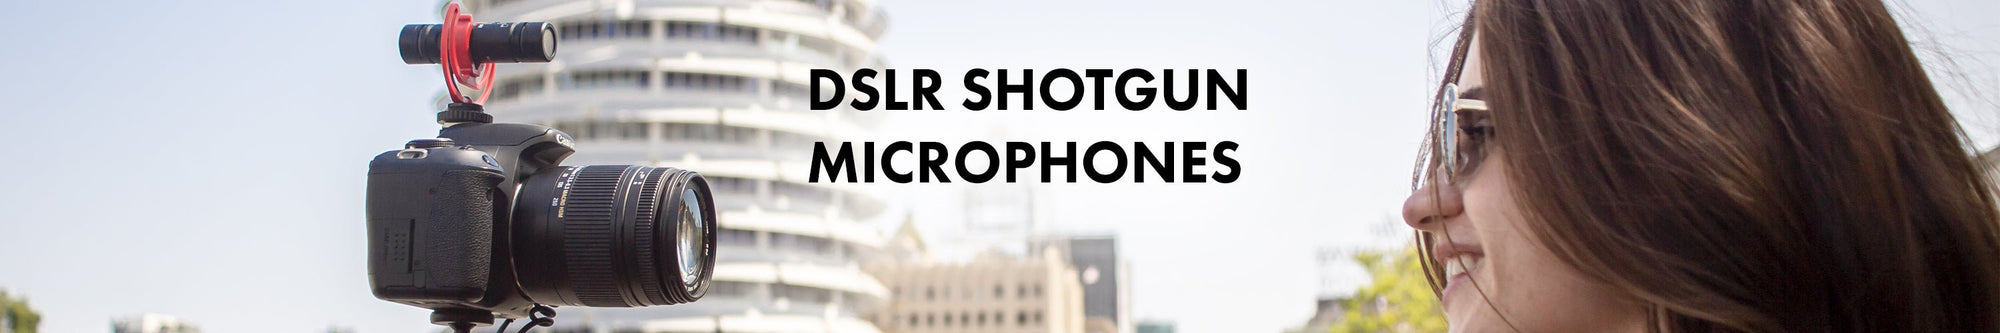 DSLR Shotgun Microphones - Movo